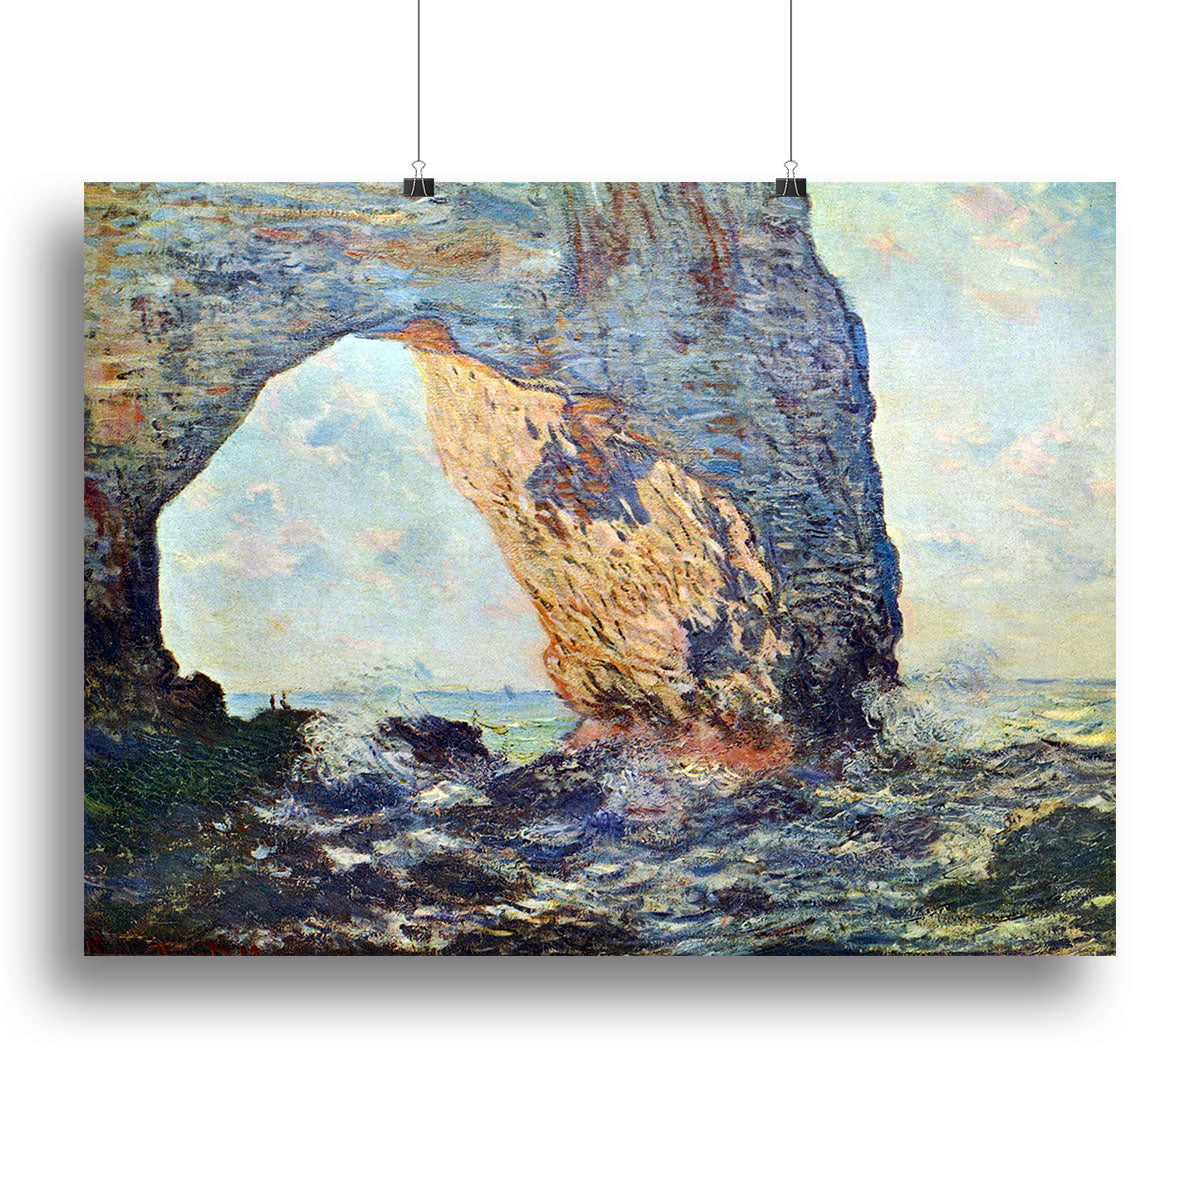 The rocky cliffs of etretat La Porte man 1 by Monet Canvas Print or Poster - Canvas Art Rocks - 2